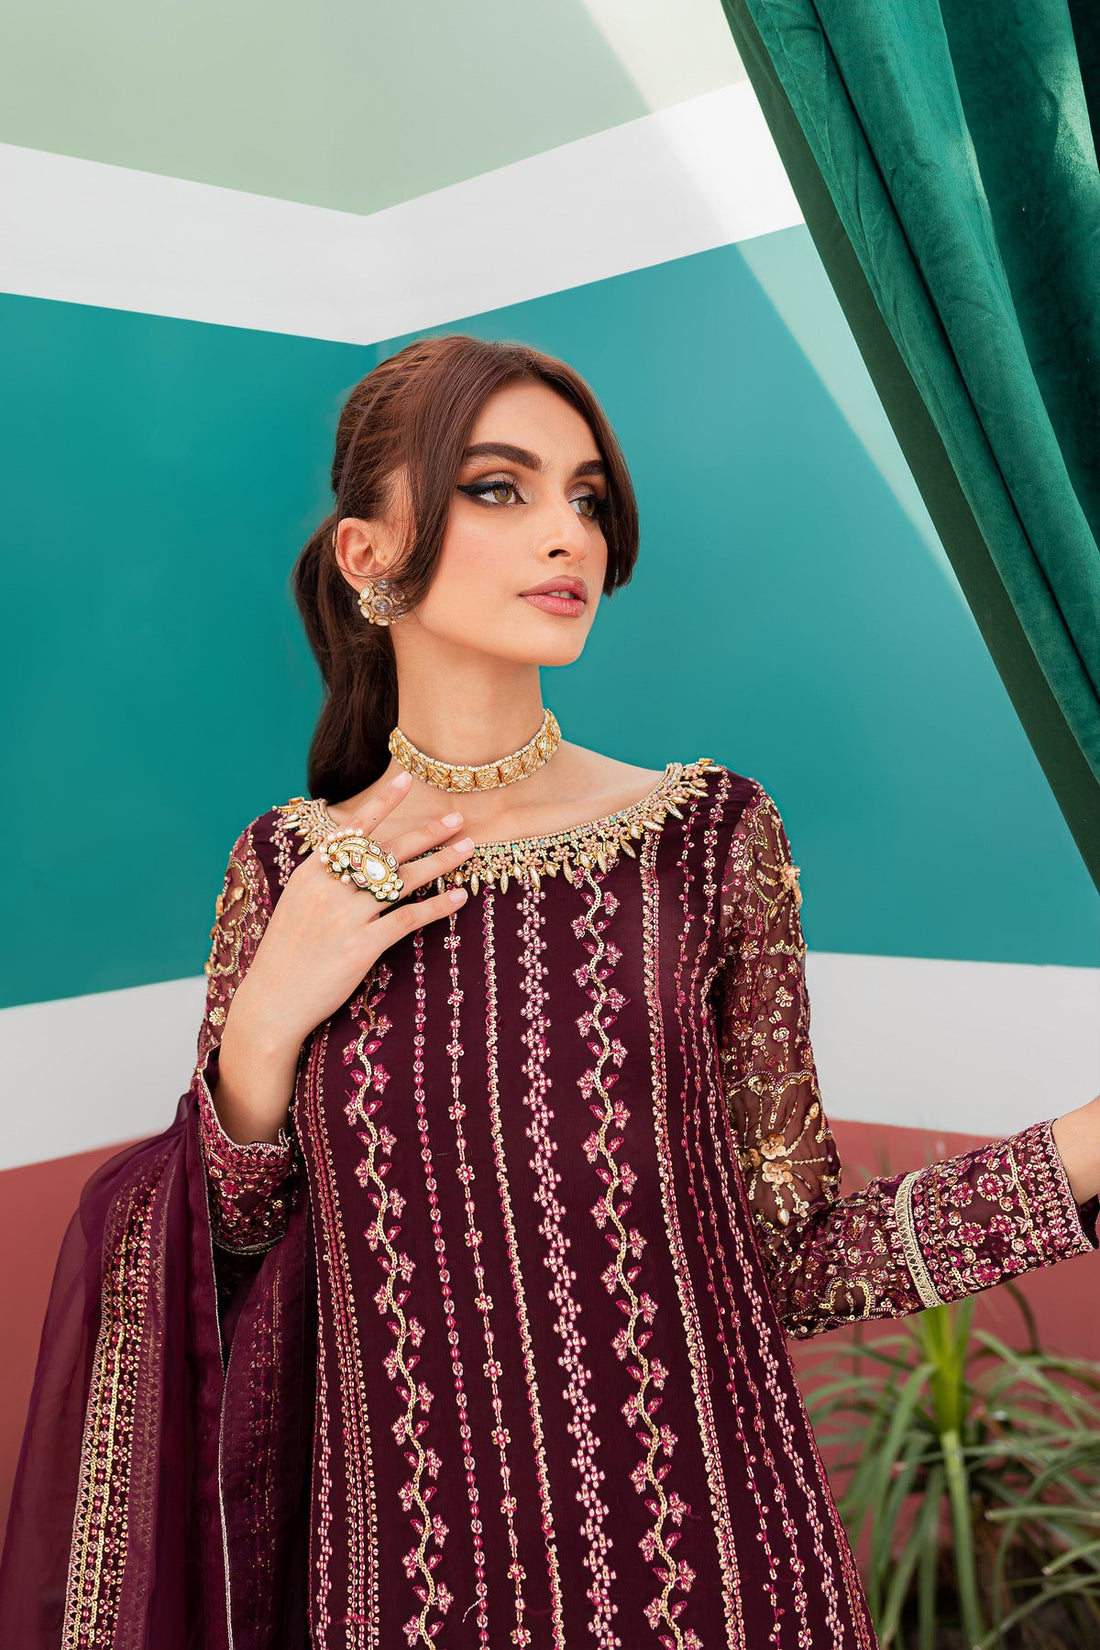 Batik | Desire Formal Dresses | Burgundy Abar - Khanumjan  Pakistani Clothes and Designer Dresses in UK, USA 